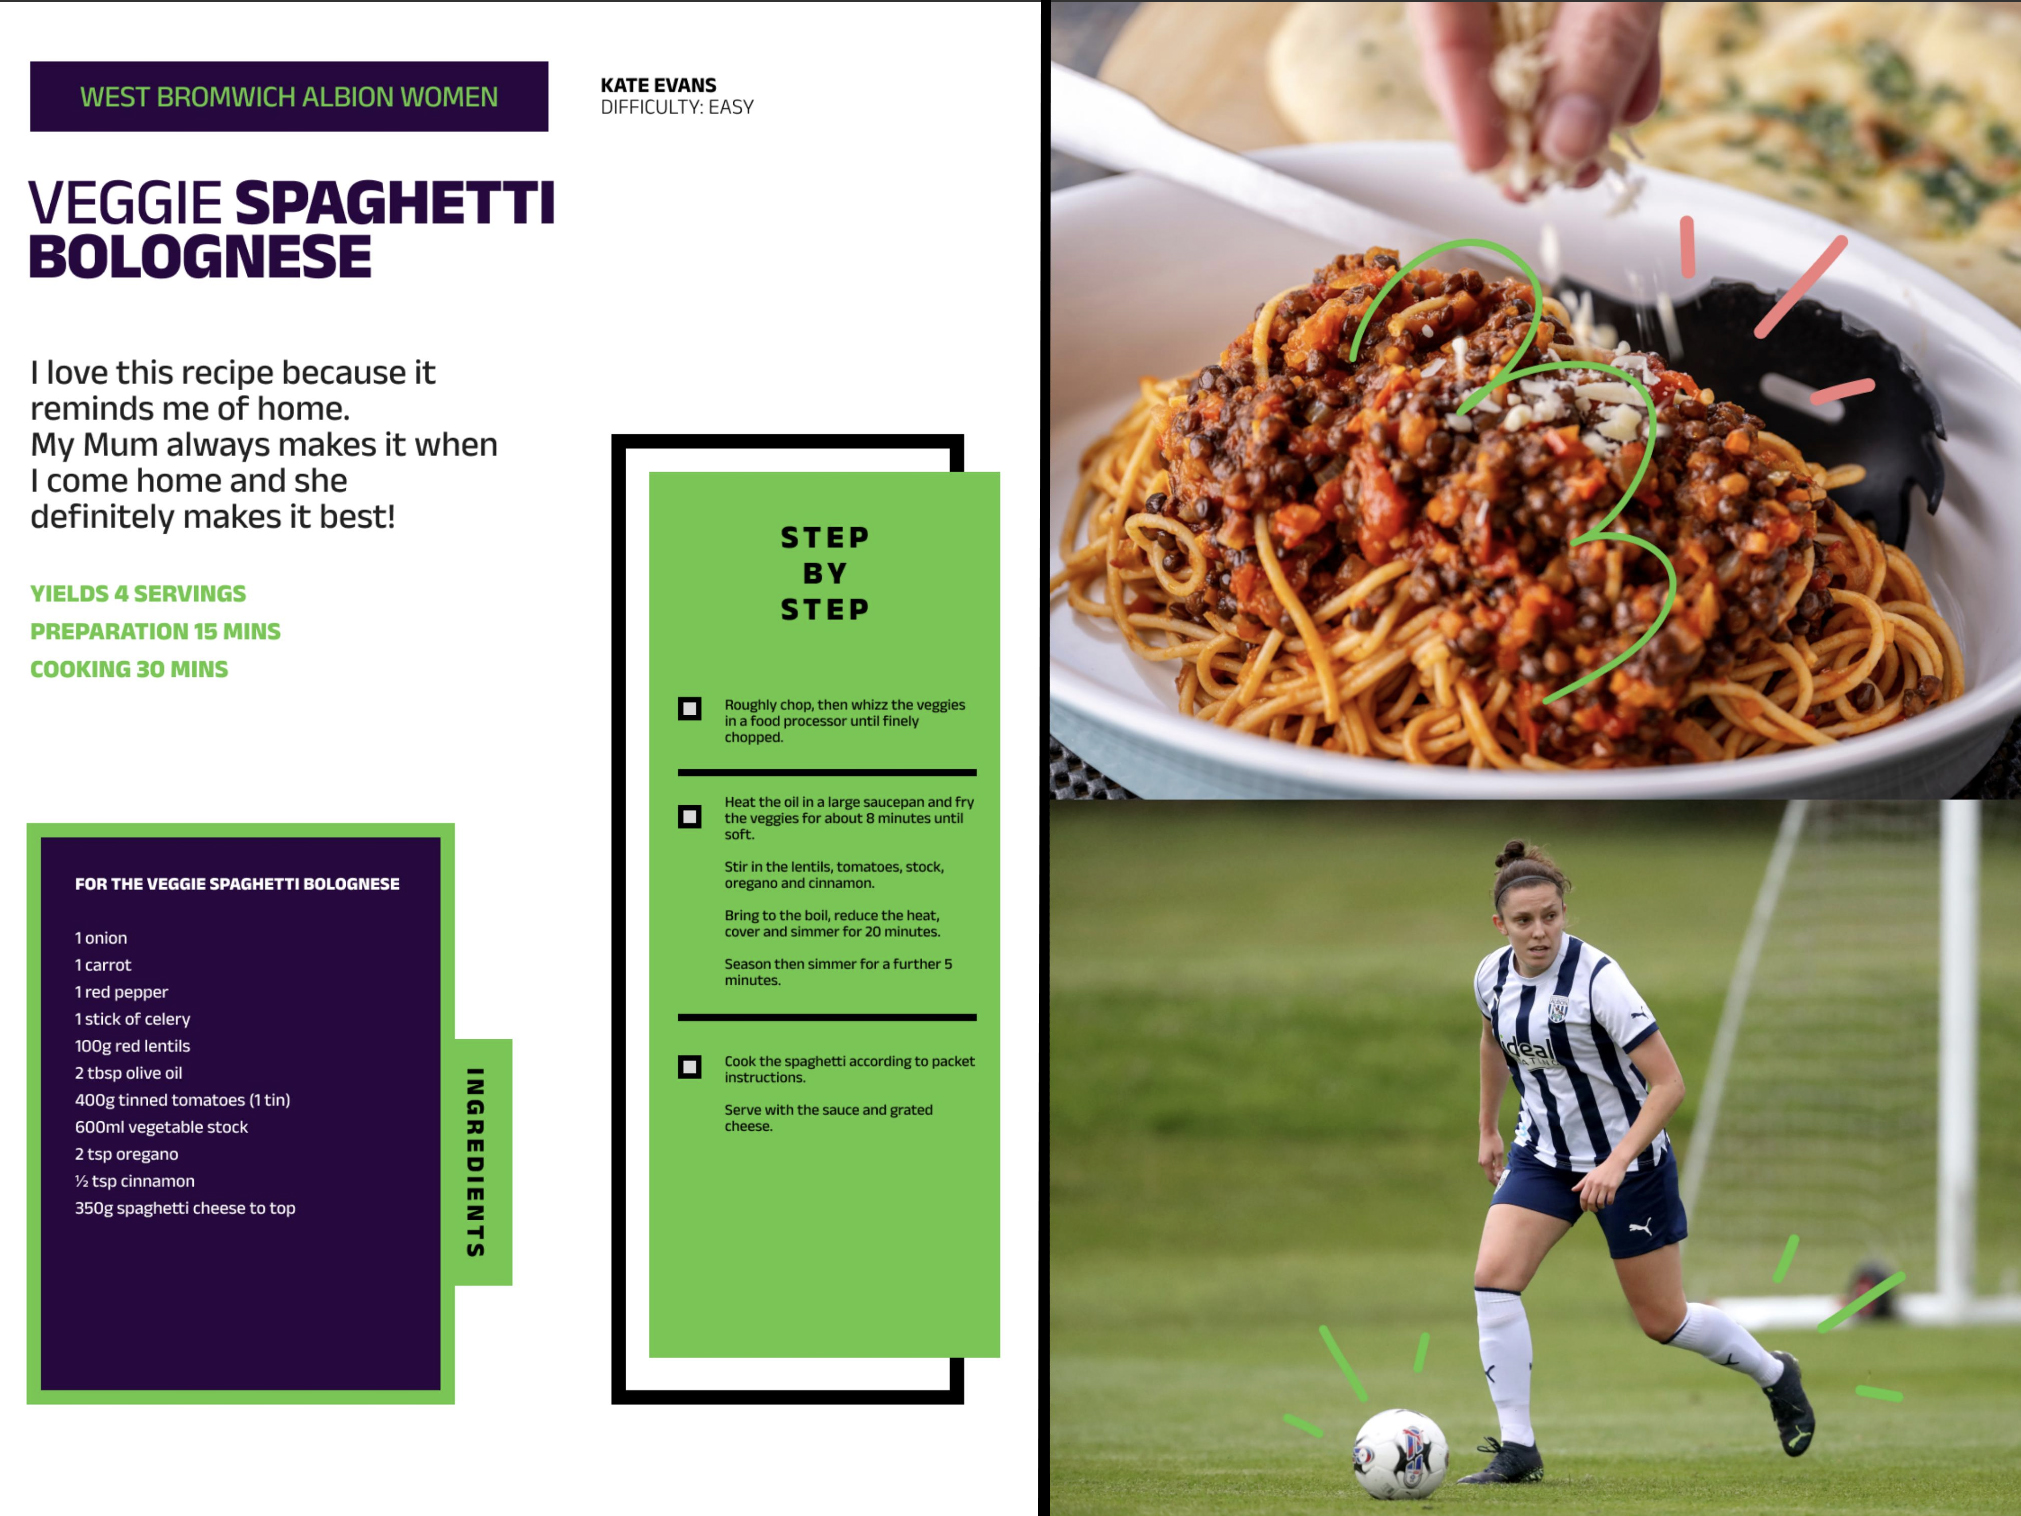 A recipe for Albion Women player Kate Evans' Veggie Spaghetti Bolognese